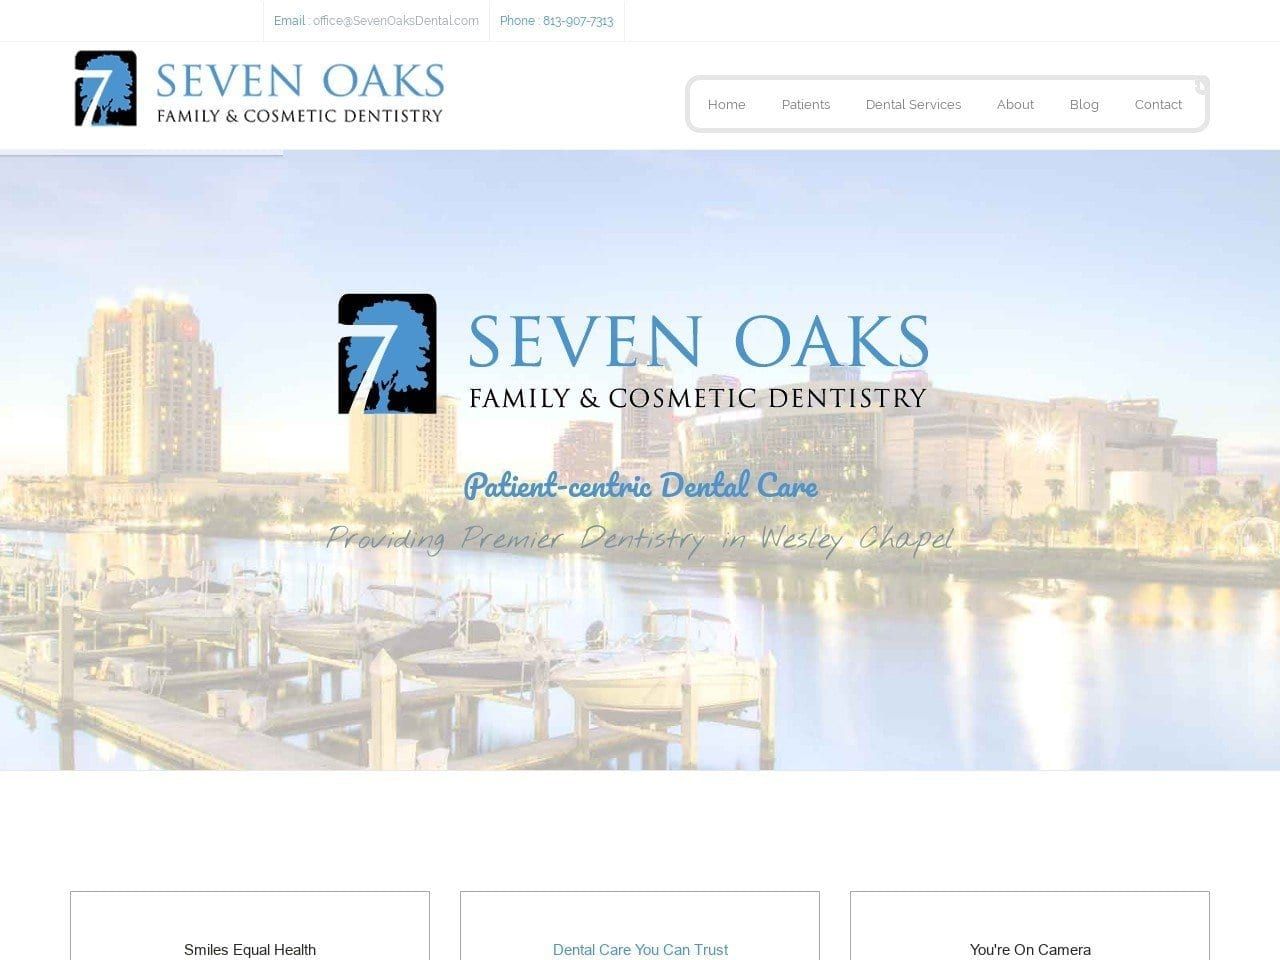 Seven Oaks Family And Cosmetic Dentist Website Screenshot from sevenoaksdental.com